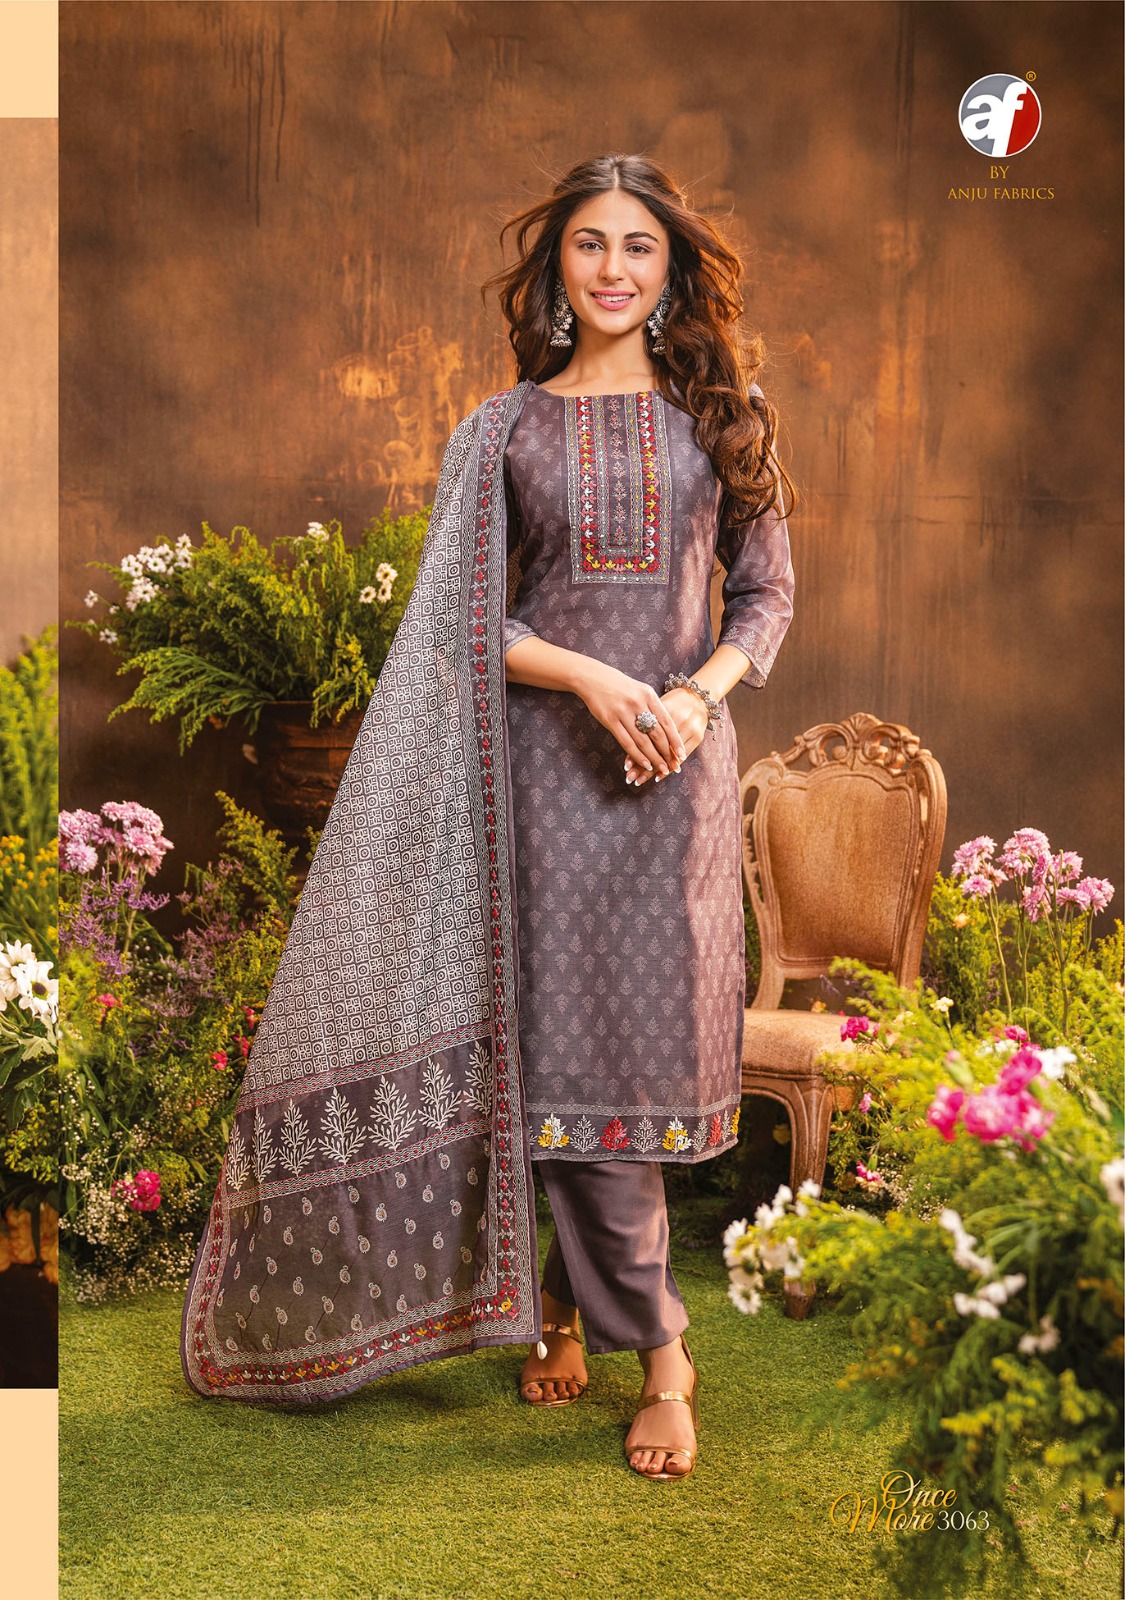 Anju Fabrics Once More Vol 2 Designer Wedding Party Salwar Suits collection 4